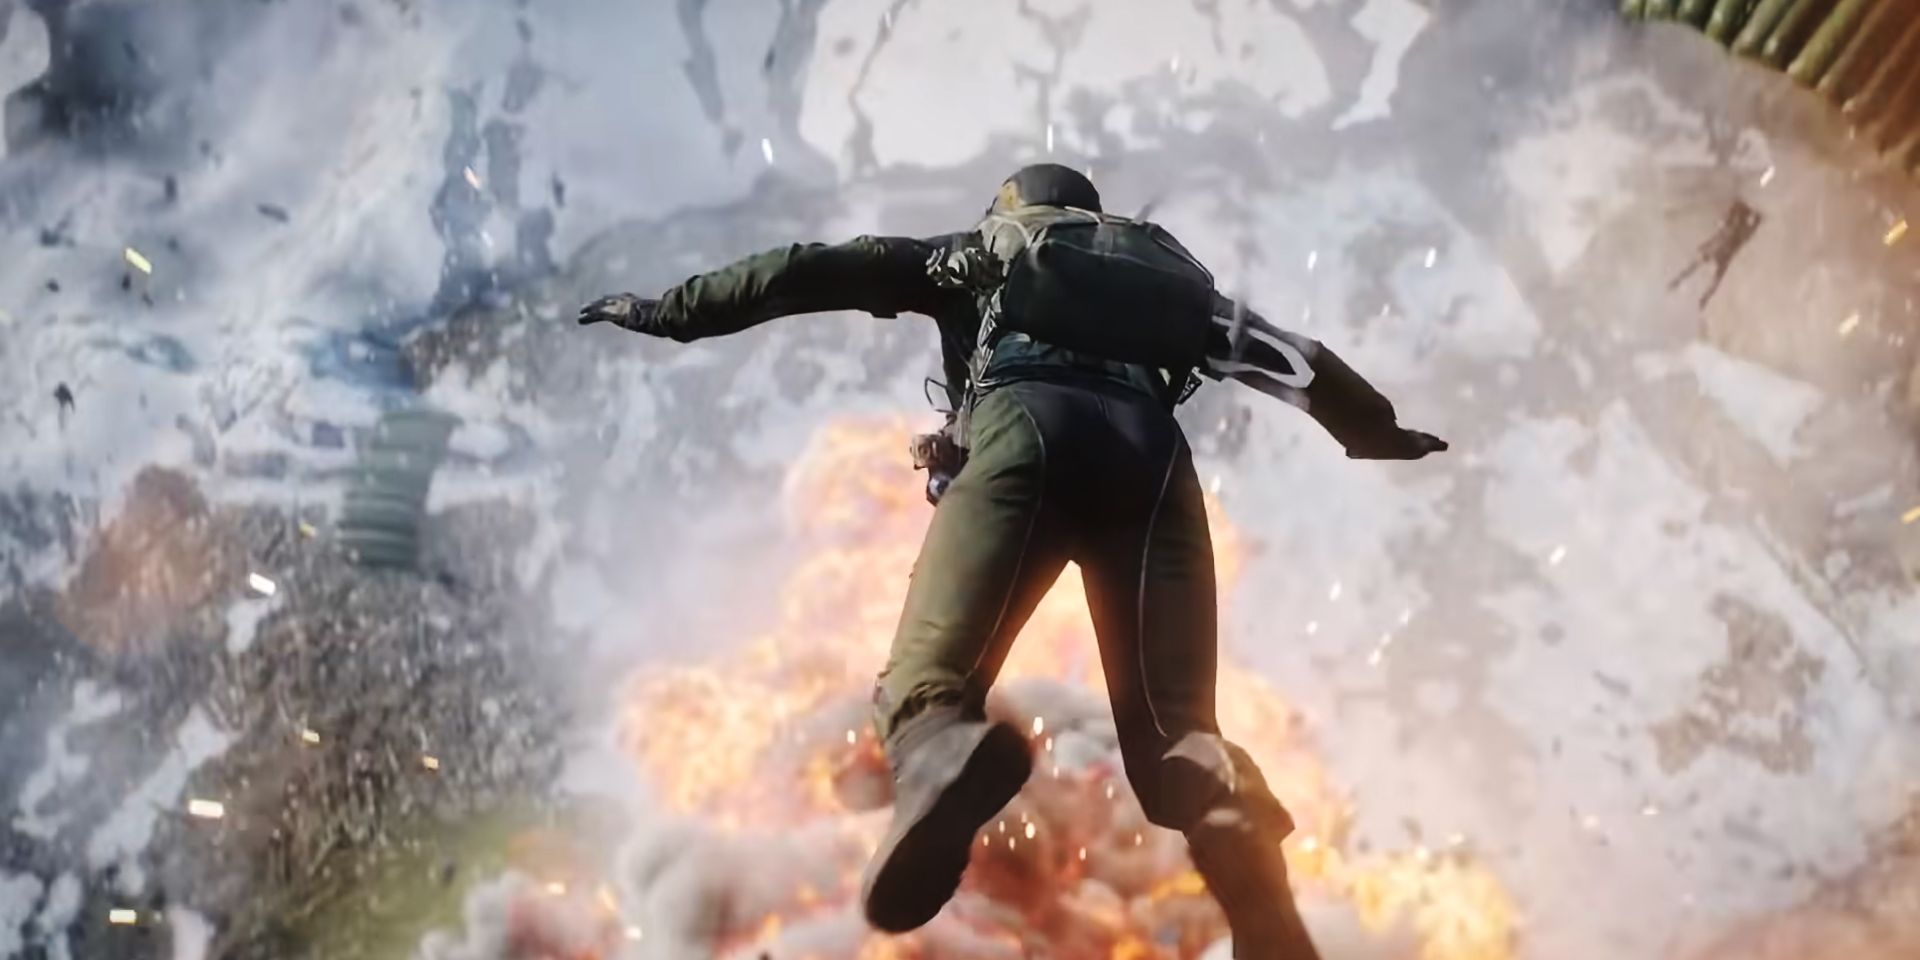 Base-jump dive in the Battlefield 2042 trailer.